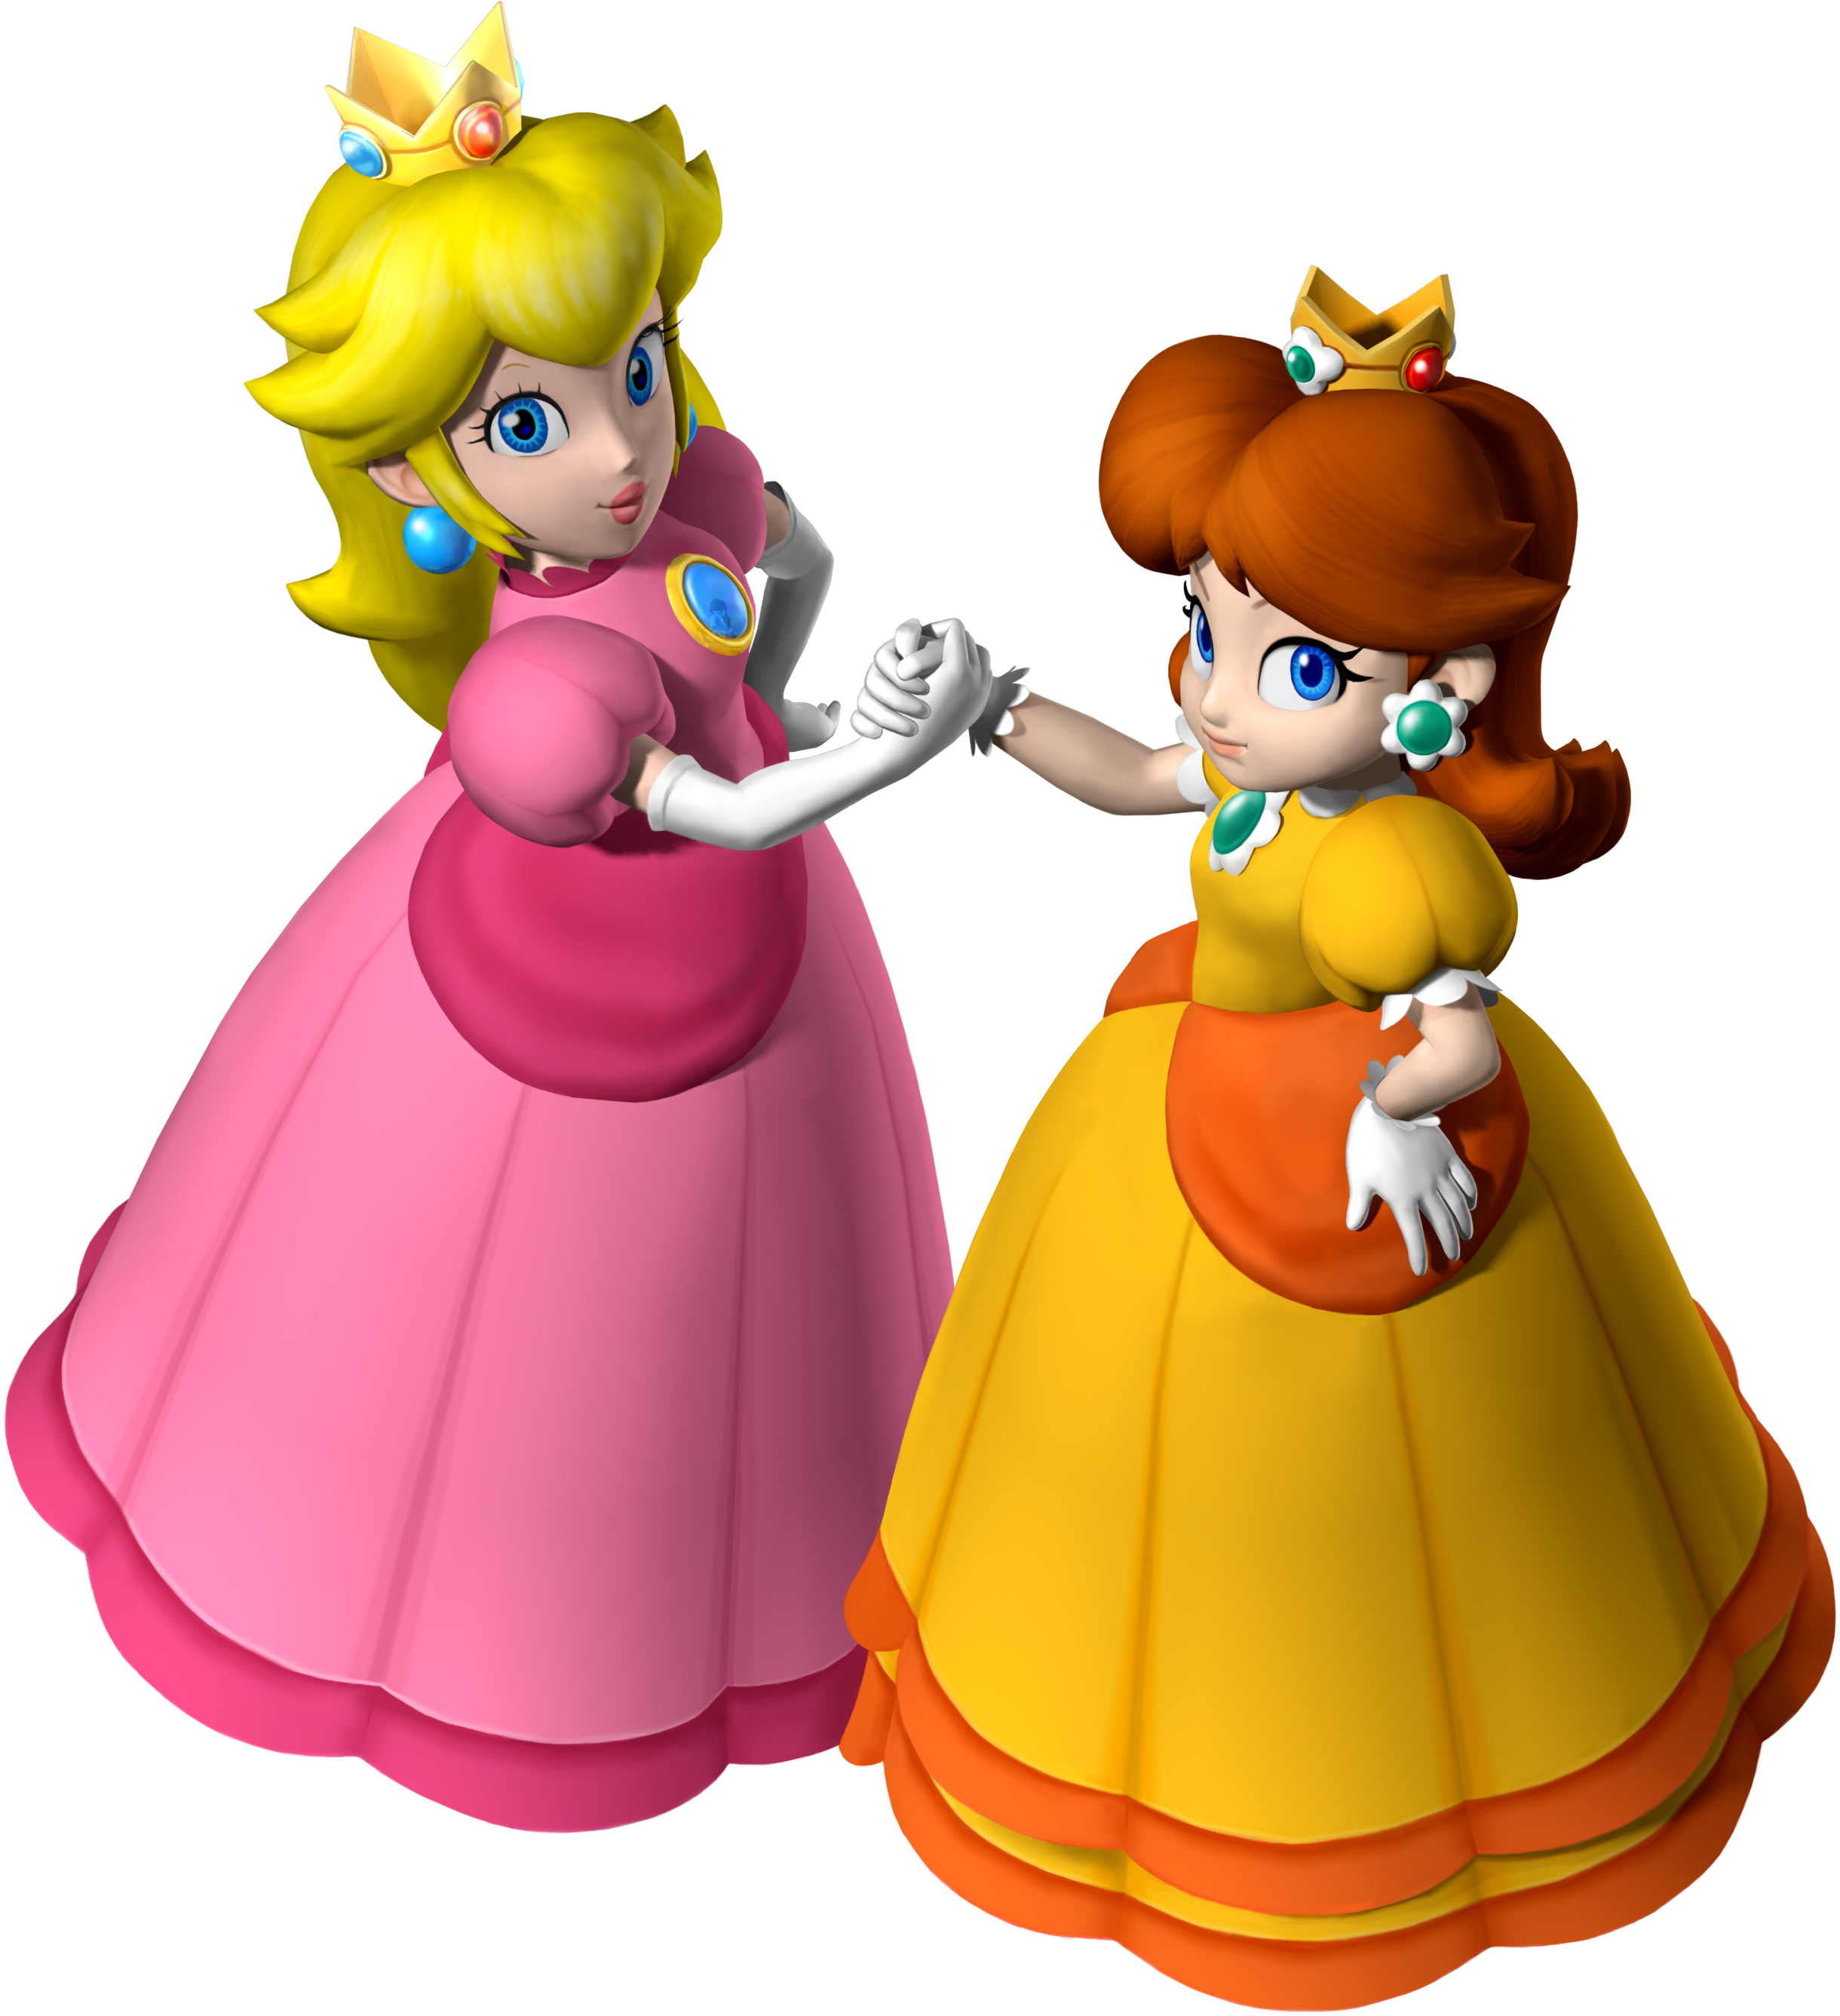 Princess_Peach_and_Princess_Daisy_-_Mario_Party_7.png